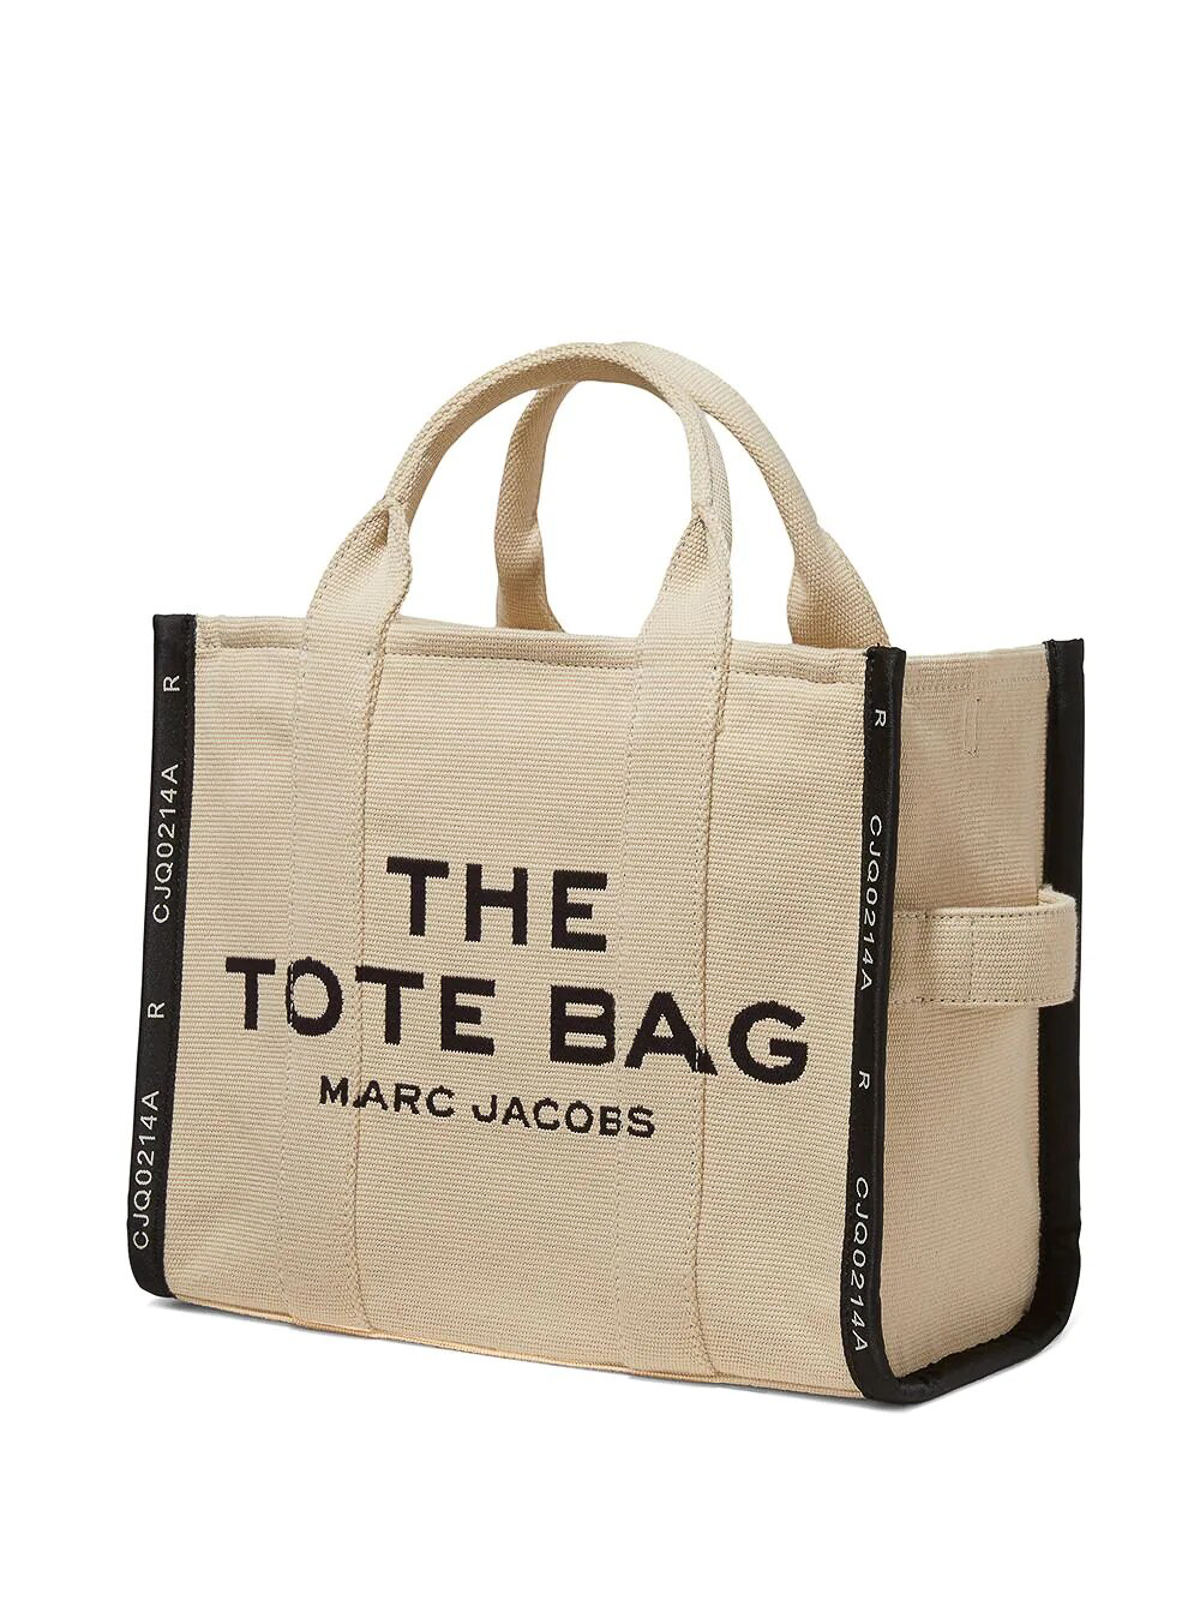 Totes bags Marc Jacobs - The jacquard medium tote bag - M0017027001263